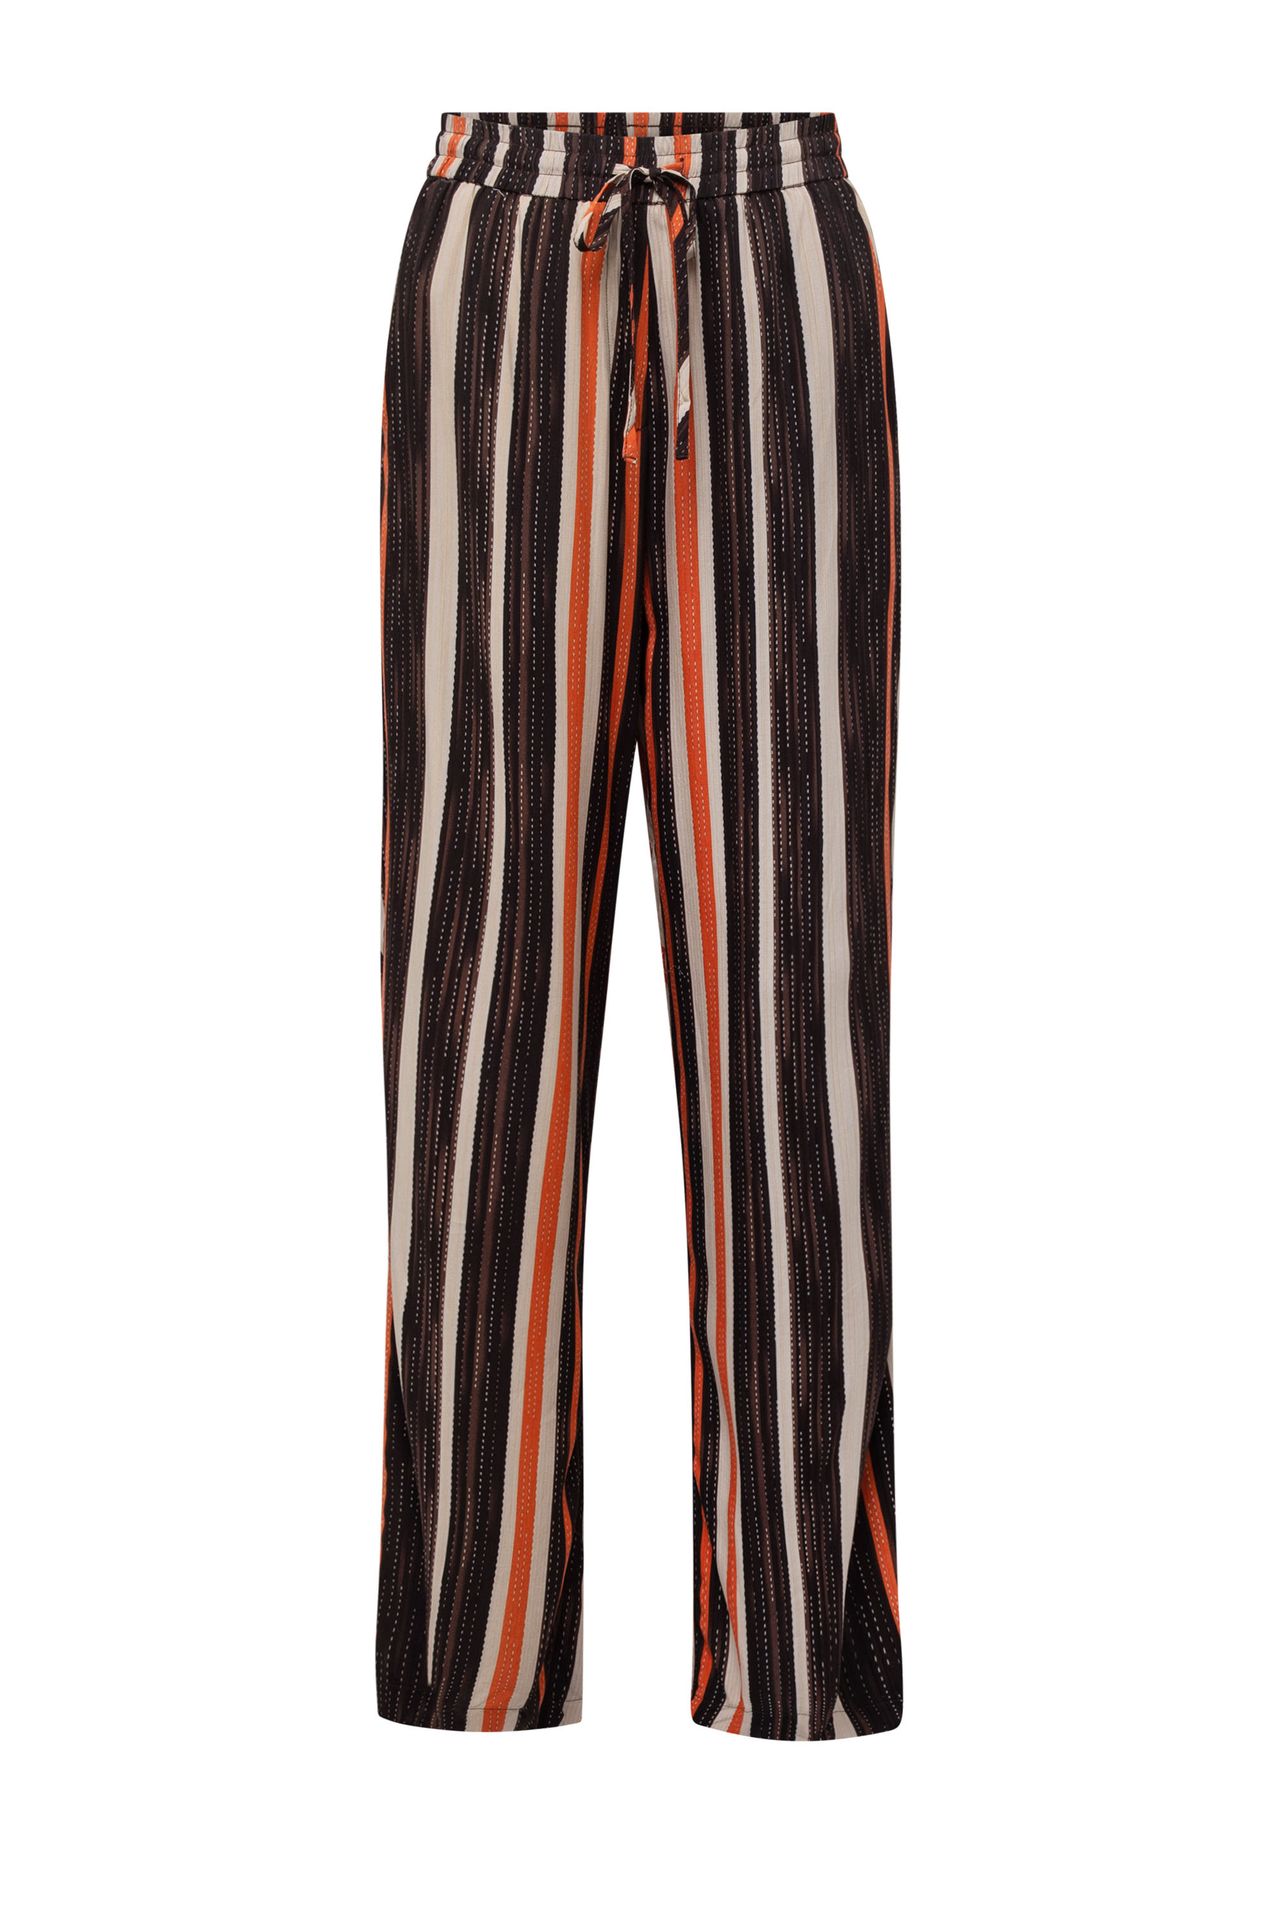 Norah Gestreepte bruine pantalon brown/orange 214059-237